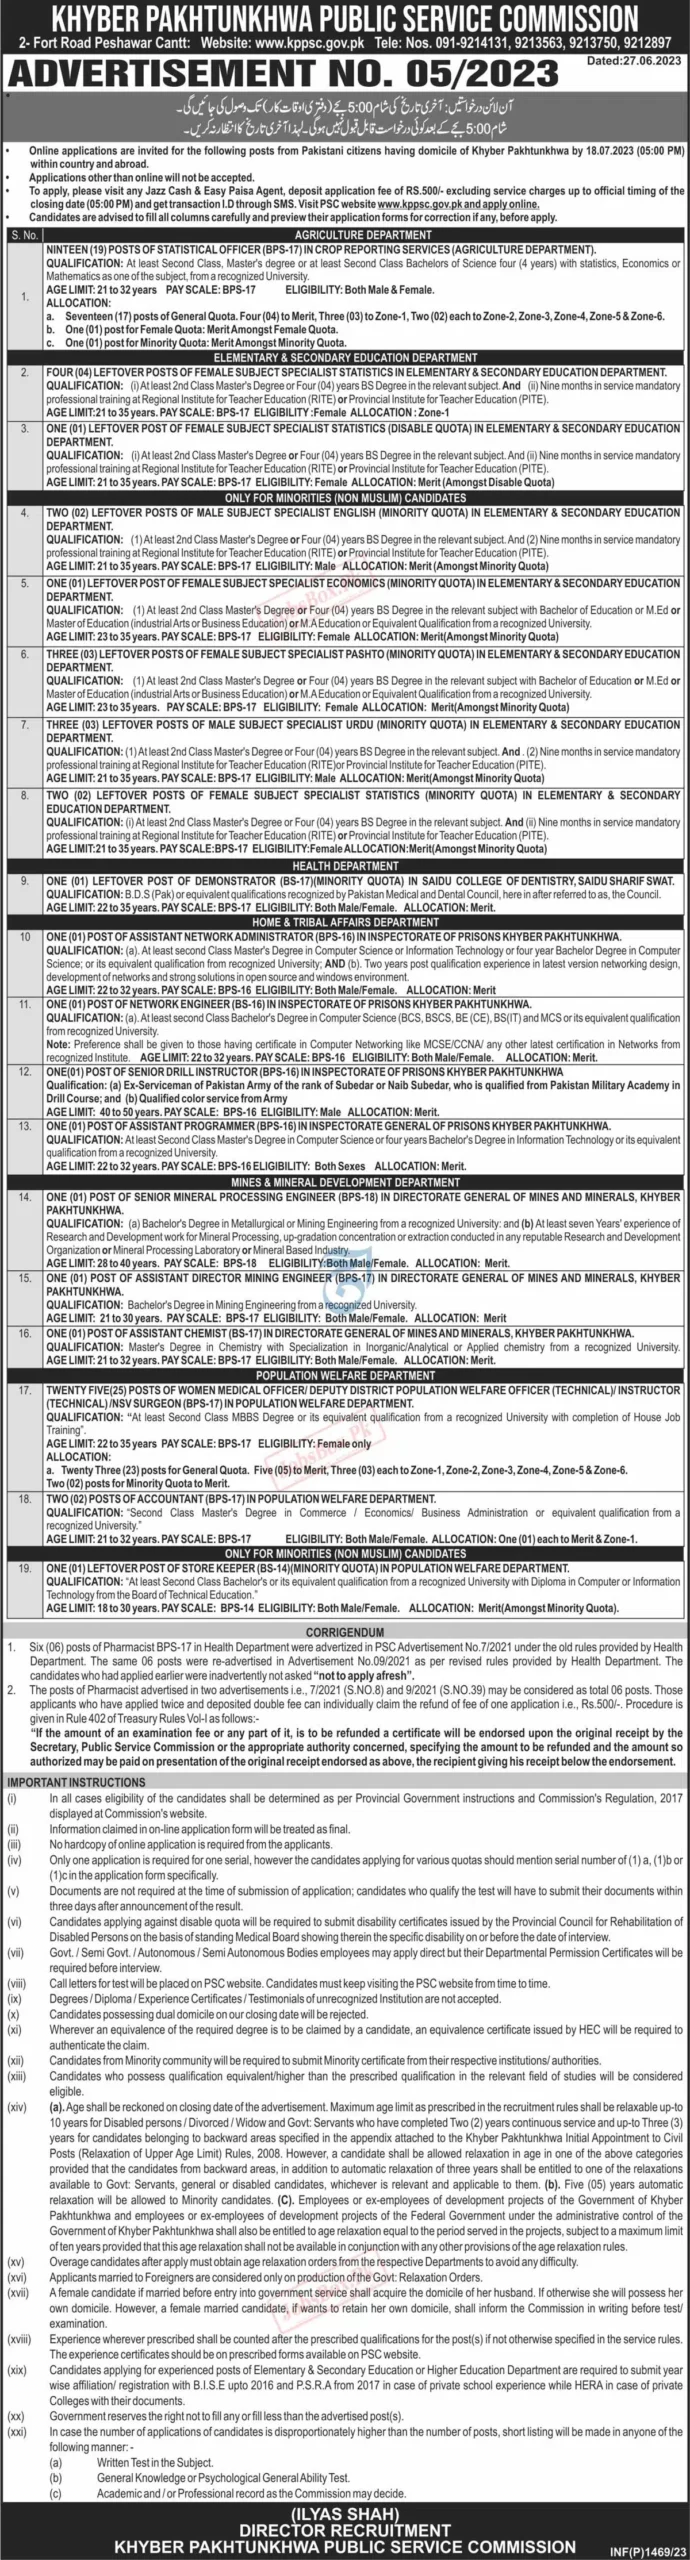 KPPSC Jobs Advertisement No.5/ 2023 – Online Apply at www.kppsc.gov.pk